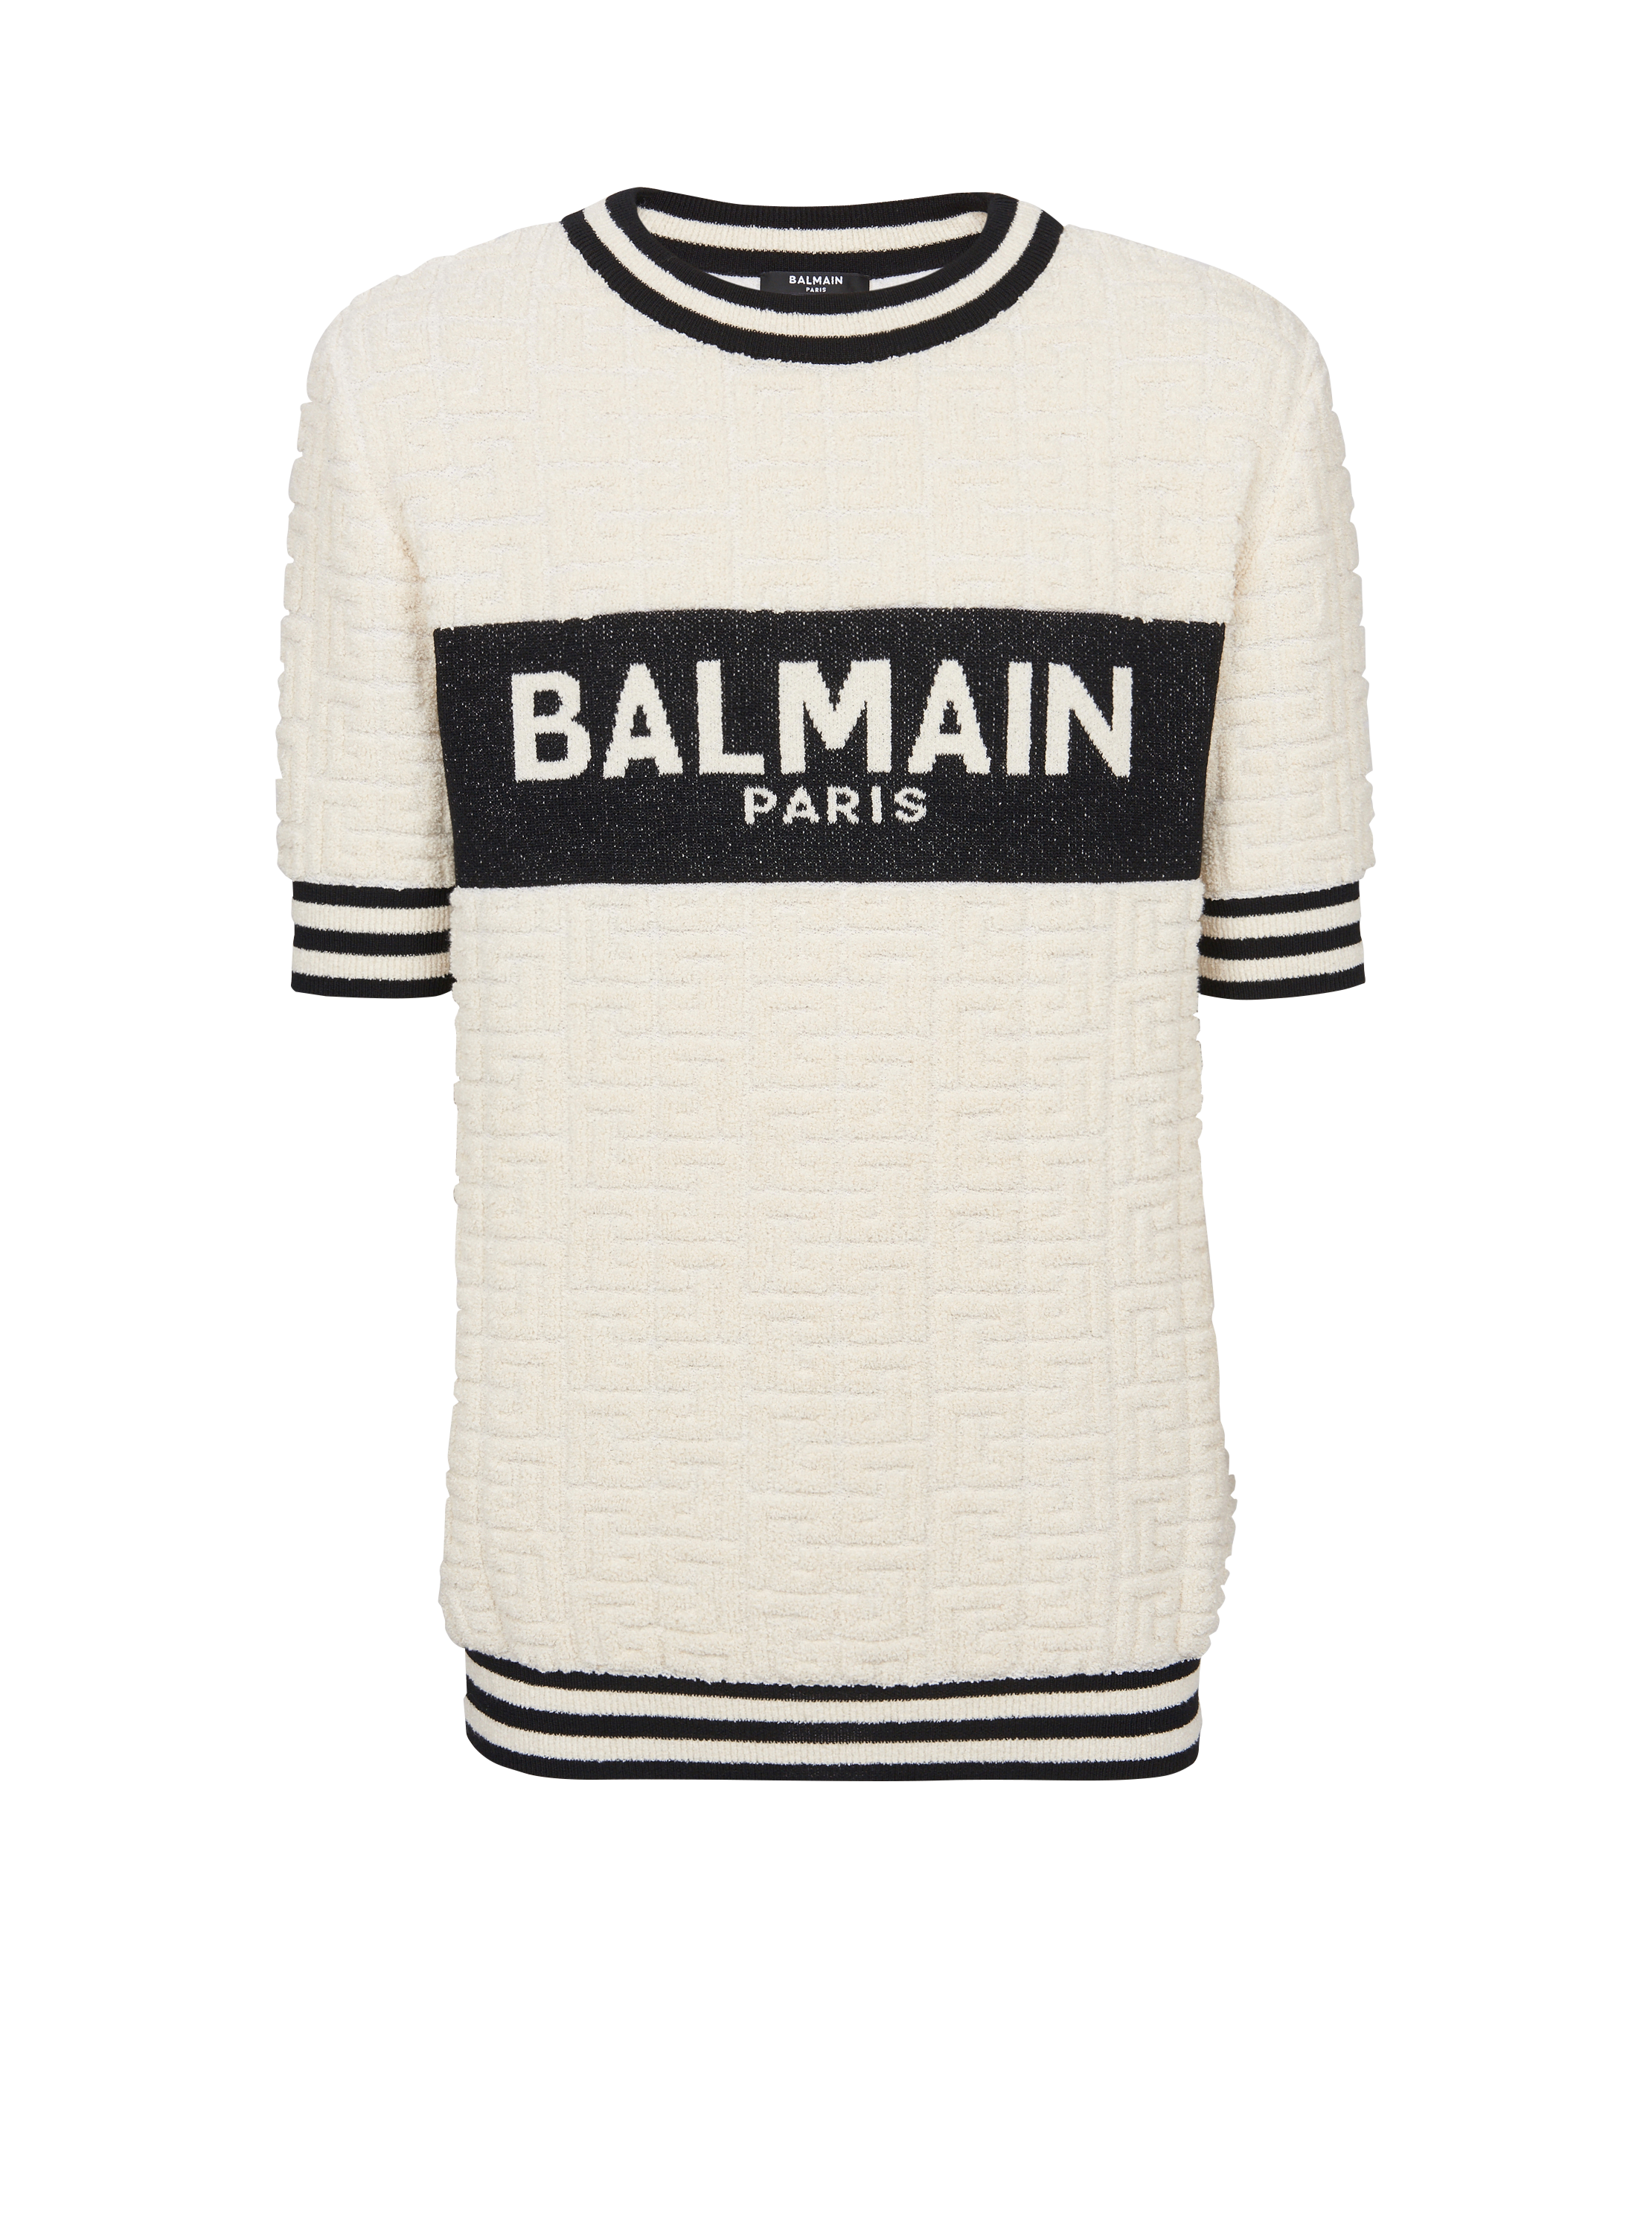 Balmain cotton terry T-shirt, white, hi-res